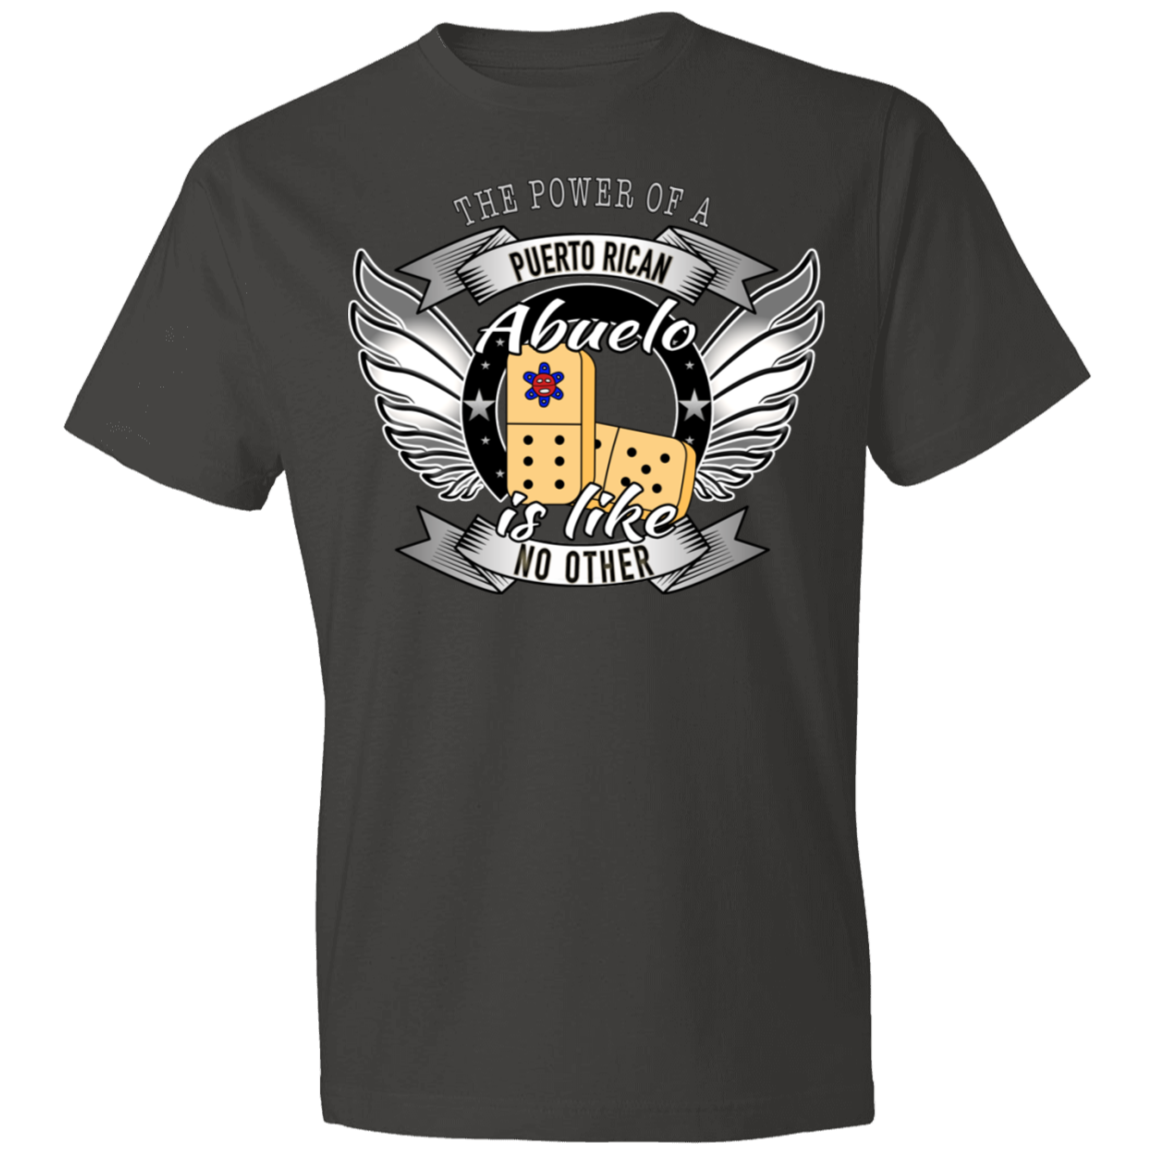 Abuelo Power T-Shirt 4.5 oz - Puerto Rican Pride